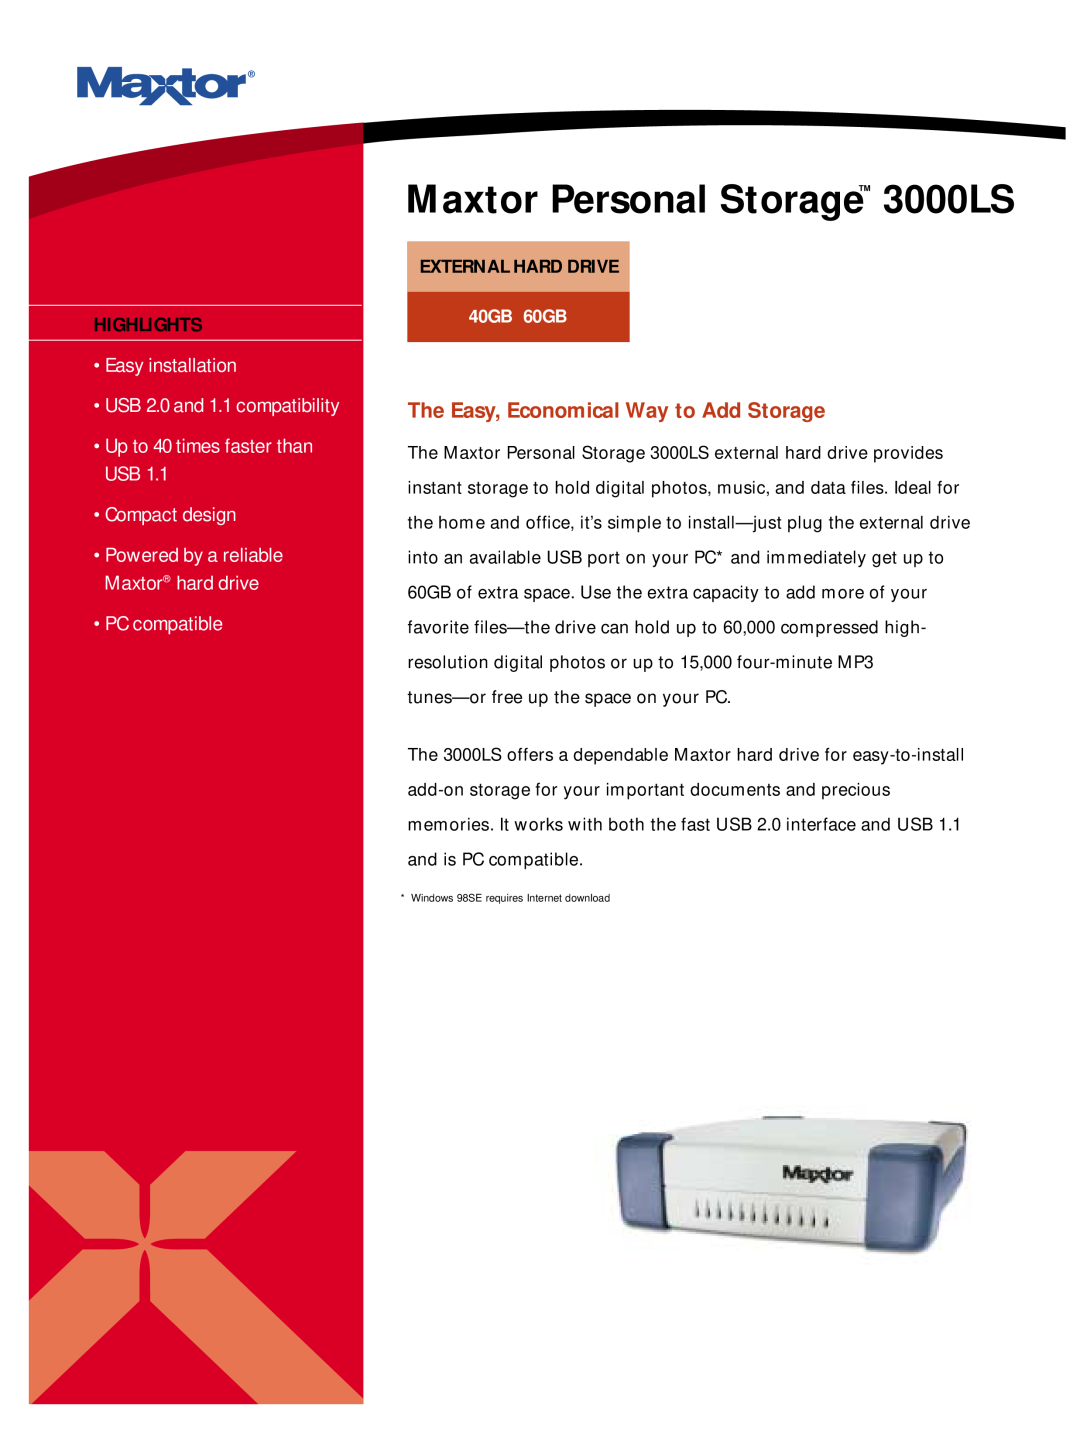 Maxtor manual External Hard Drive, Maxtor Personal Storage 3000LS, Highlights, PC compatible, 40GB 60GB 